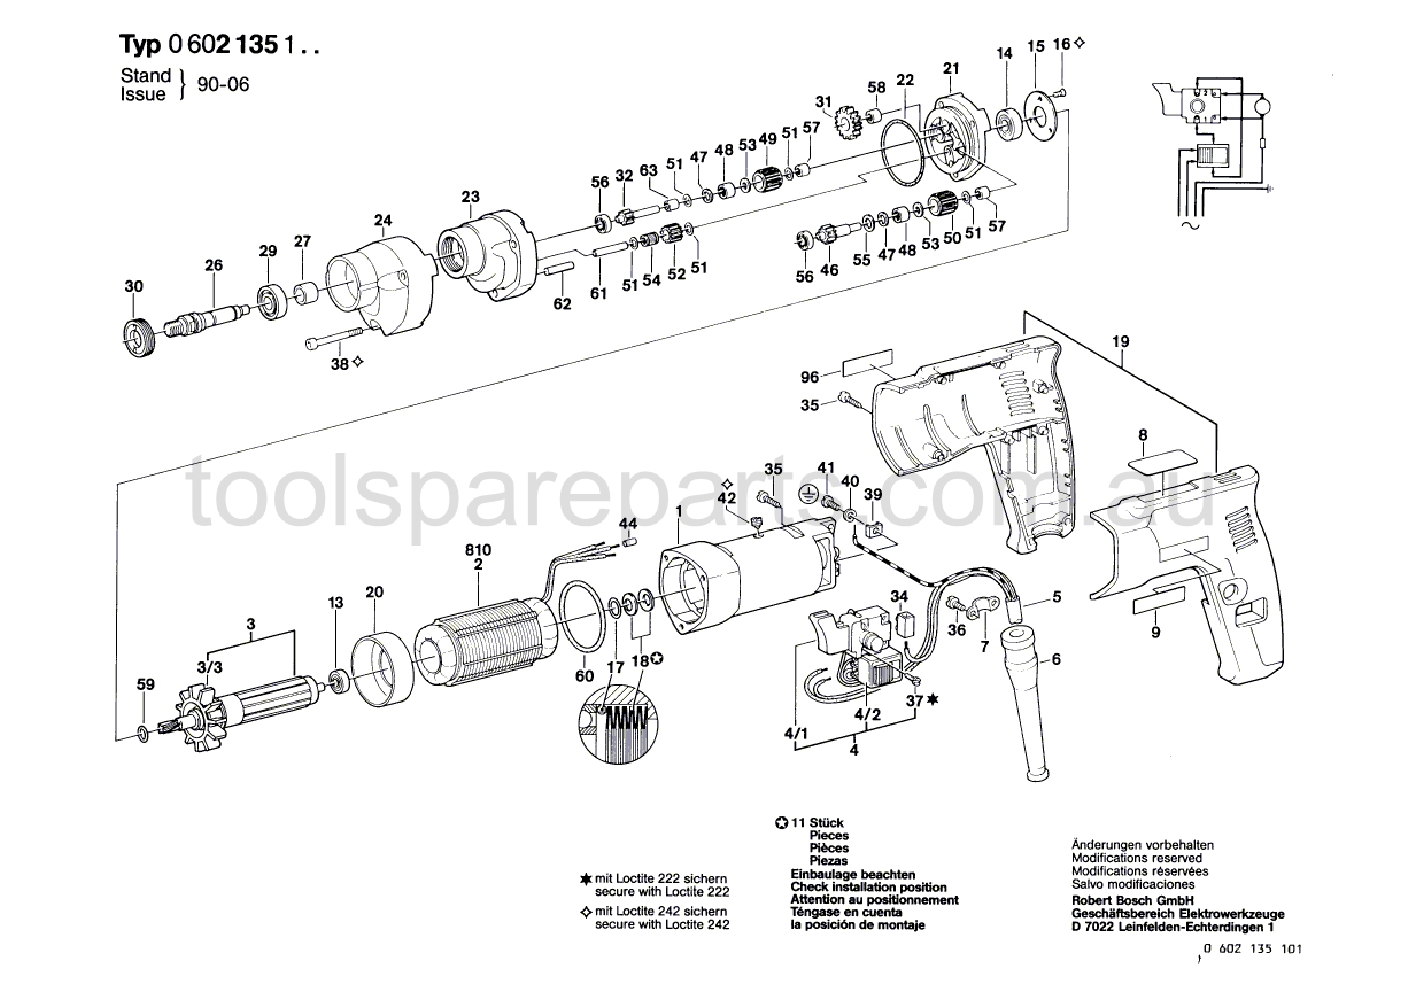 Bosch GR.57 0602135107  Diagram 1